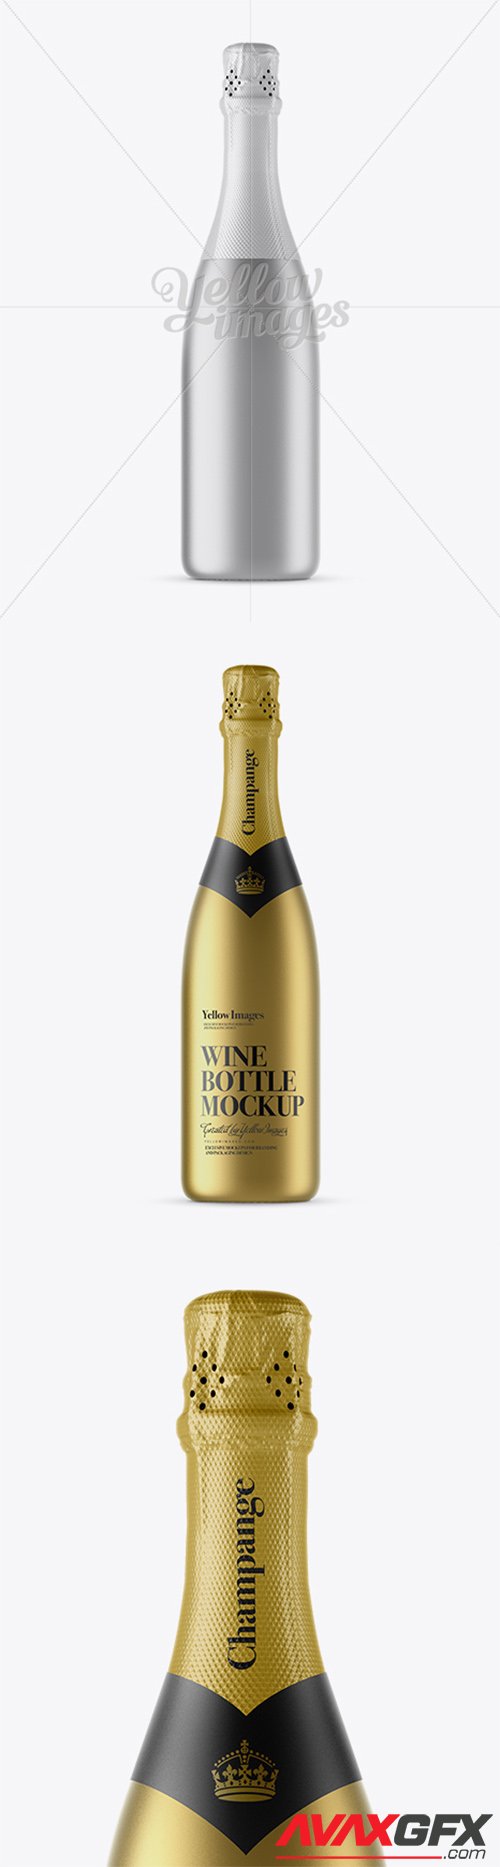 Matte Metallic Champagne Bottle with Textured Foil Mockup 78952 TIF